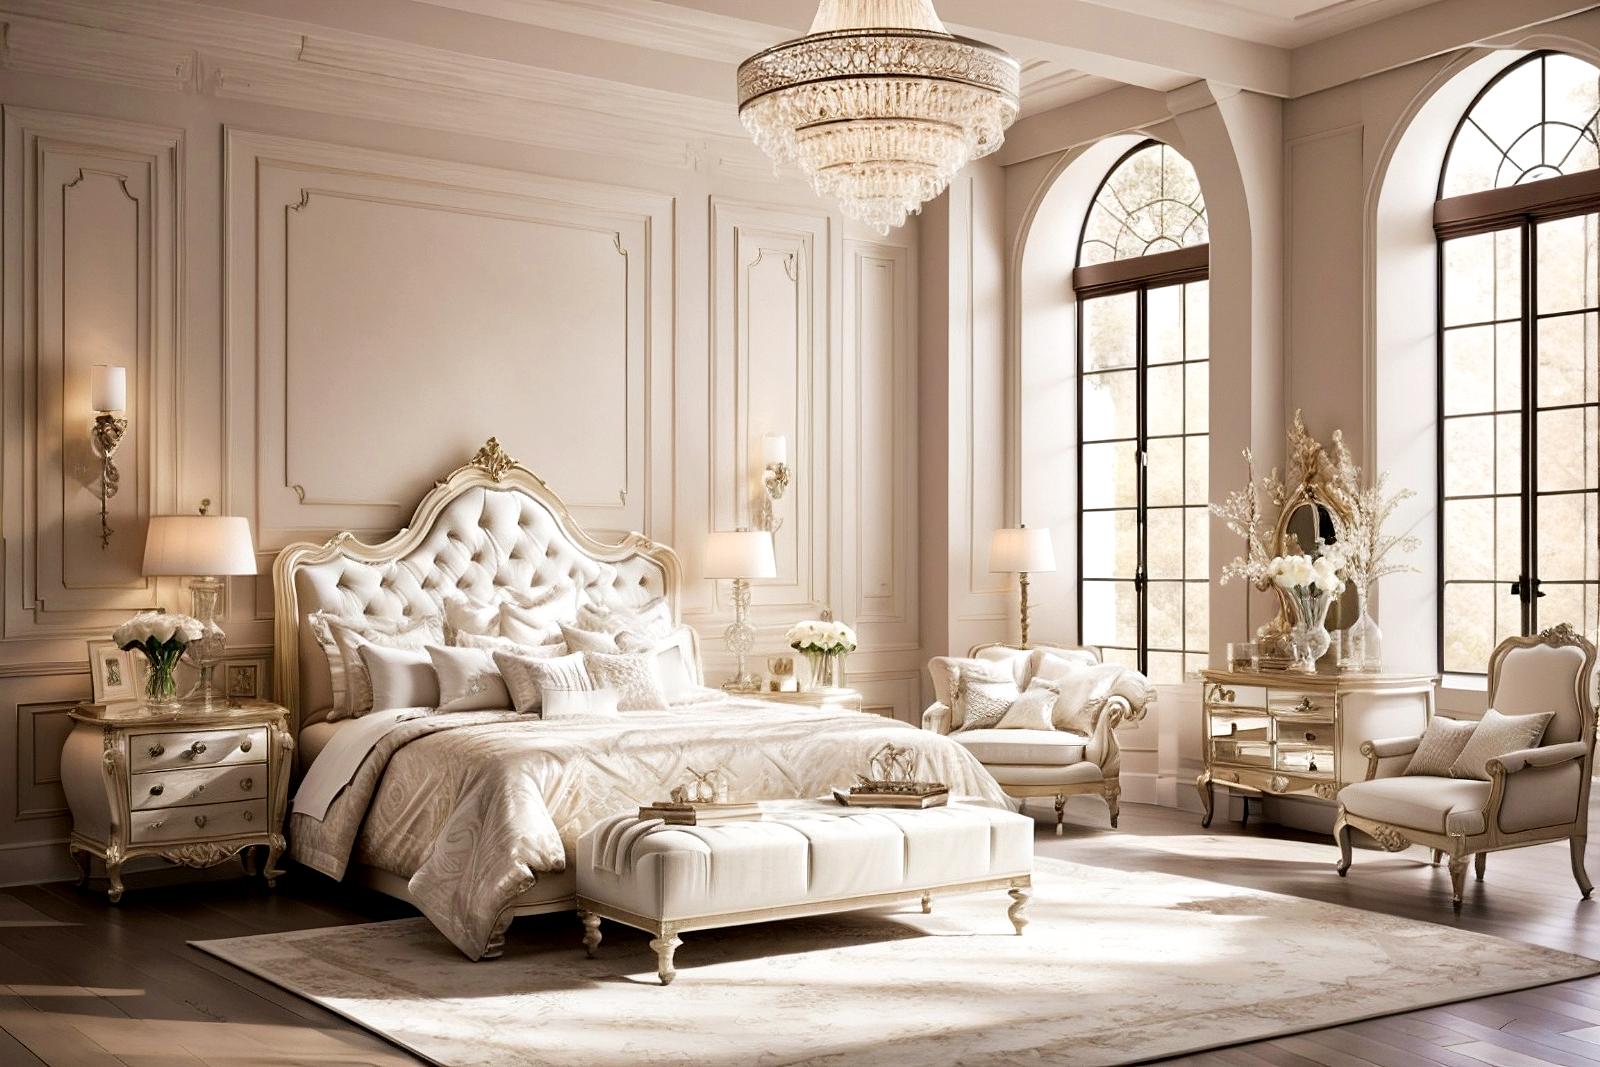 Budget-friendly Luxury Bedroom